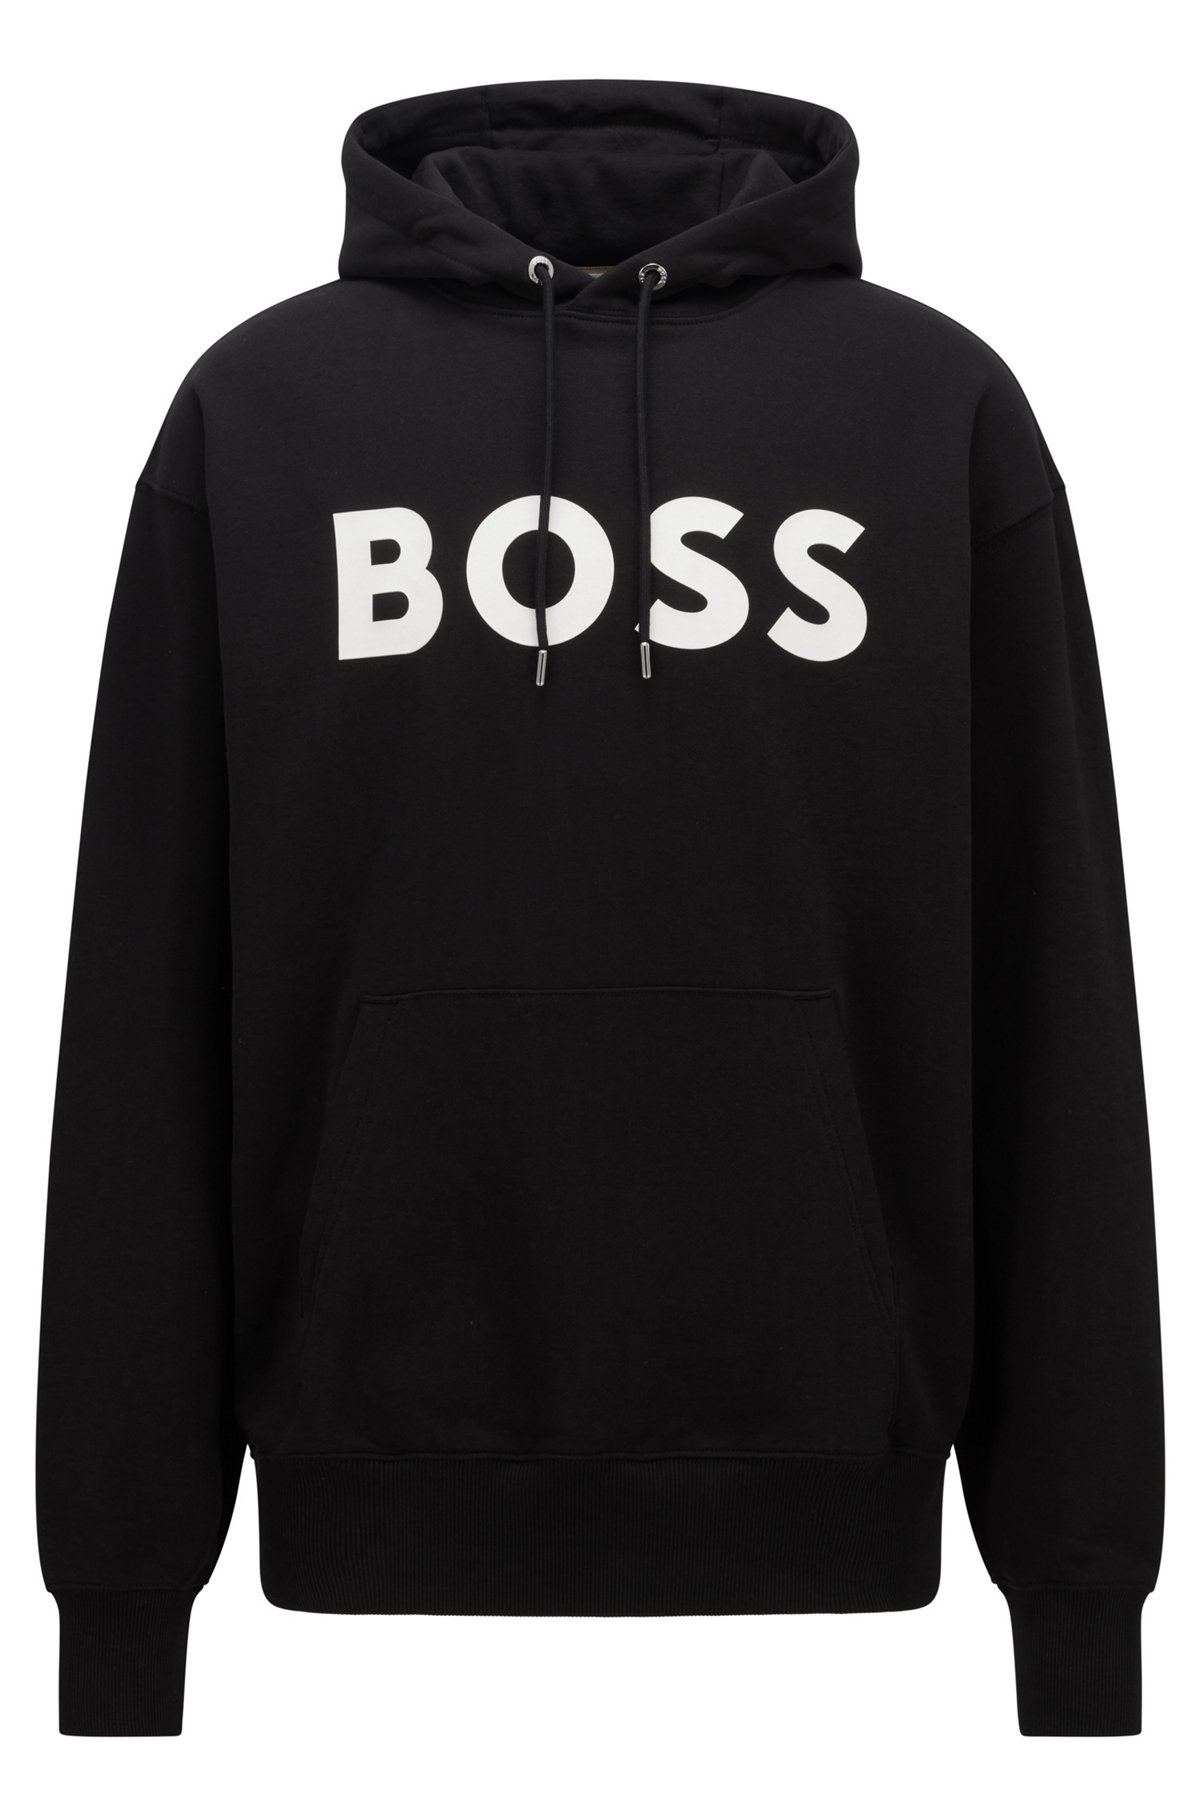 mølle Markér lobby BOSS - Organic-cotton hooded sweatshirt with contrast logo